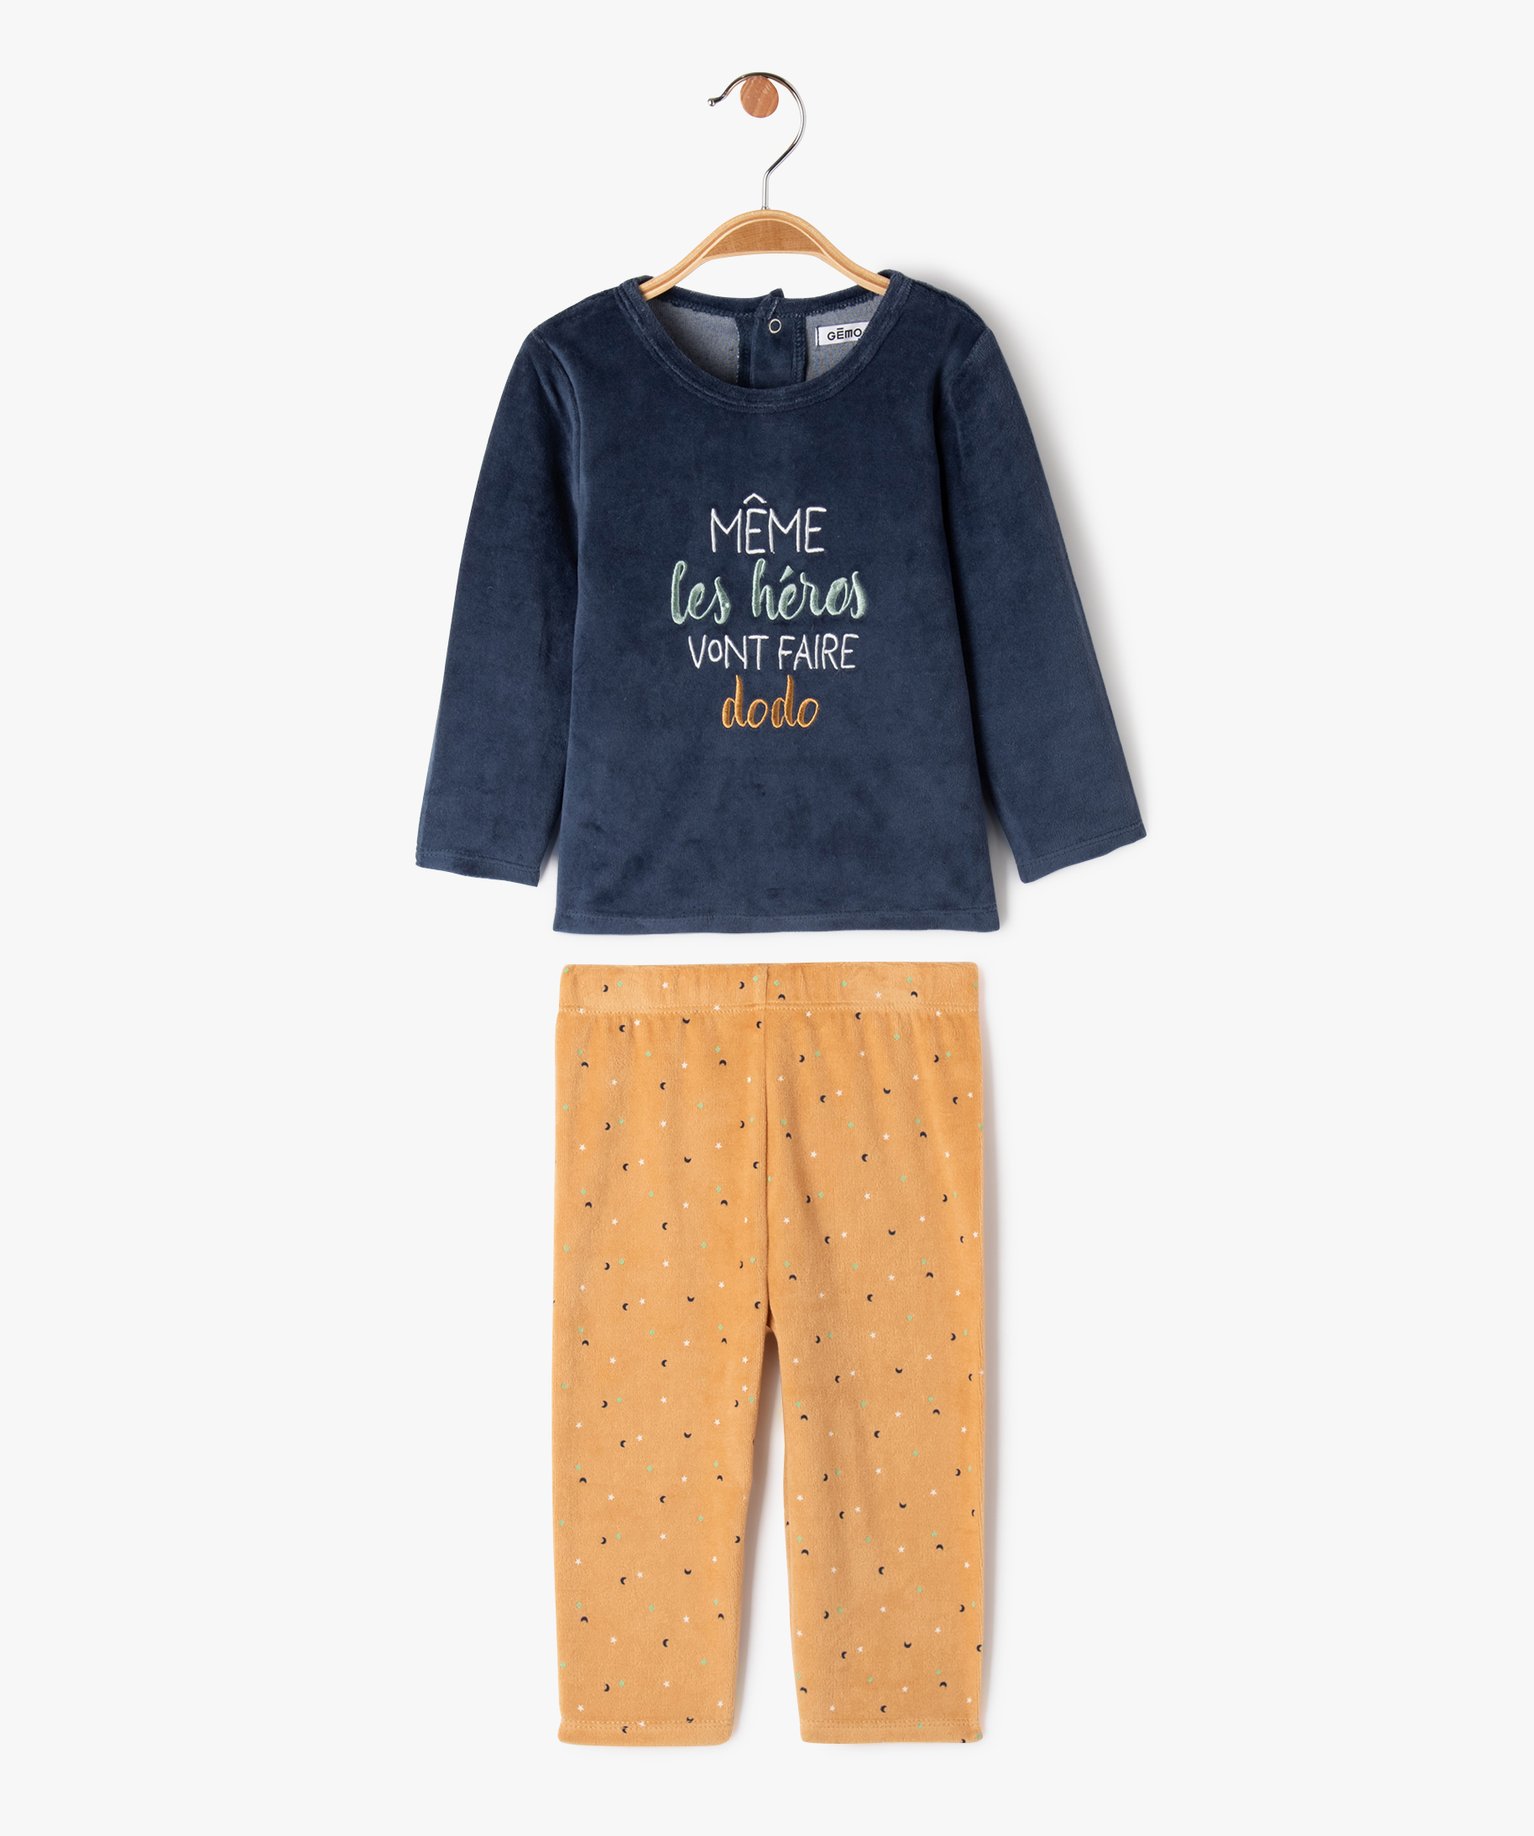 Pyjama 2 pièces en velours avec inscription brodée bébé garçon - GEMO